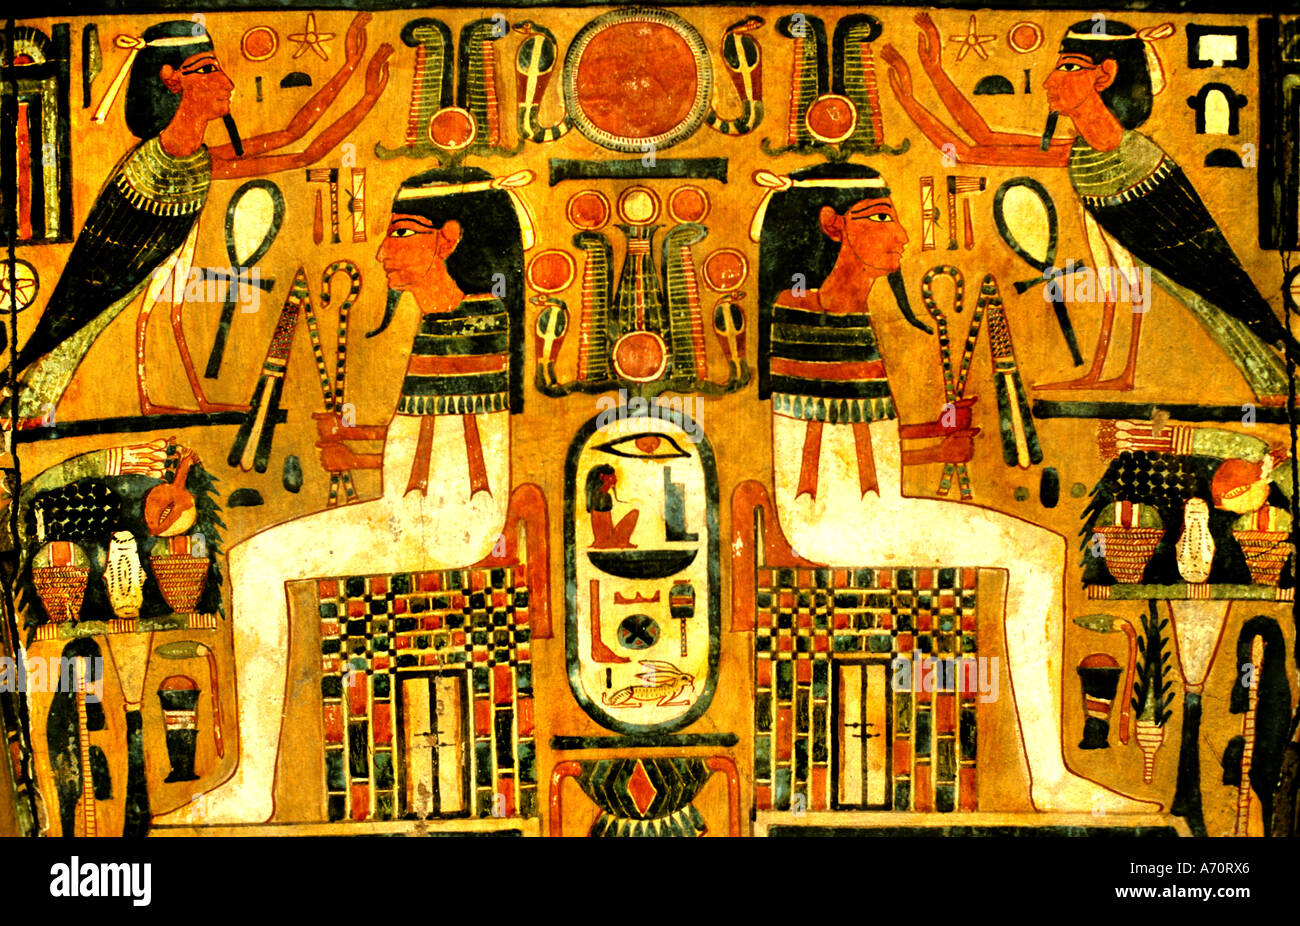 Museum Egypt Antiquity Sarcophagus Coffin Pharaoh Art Painting Stock Photo